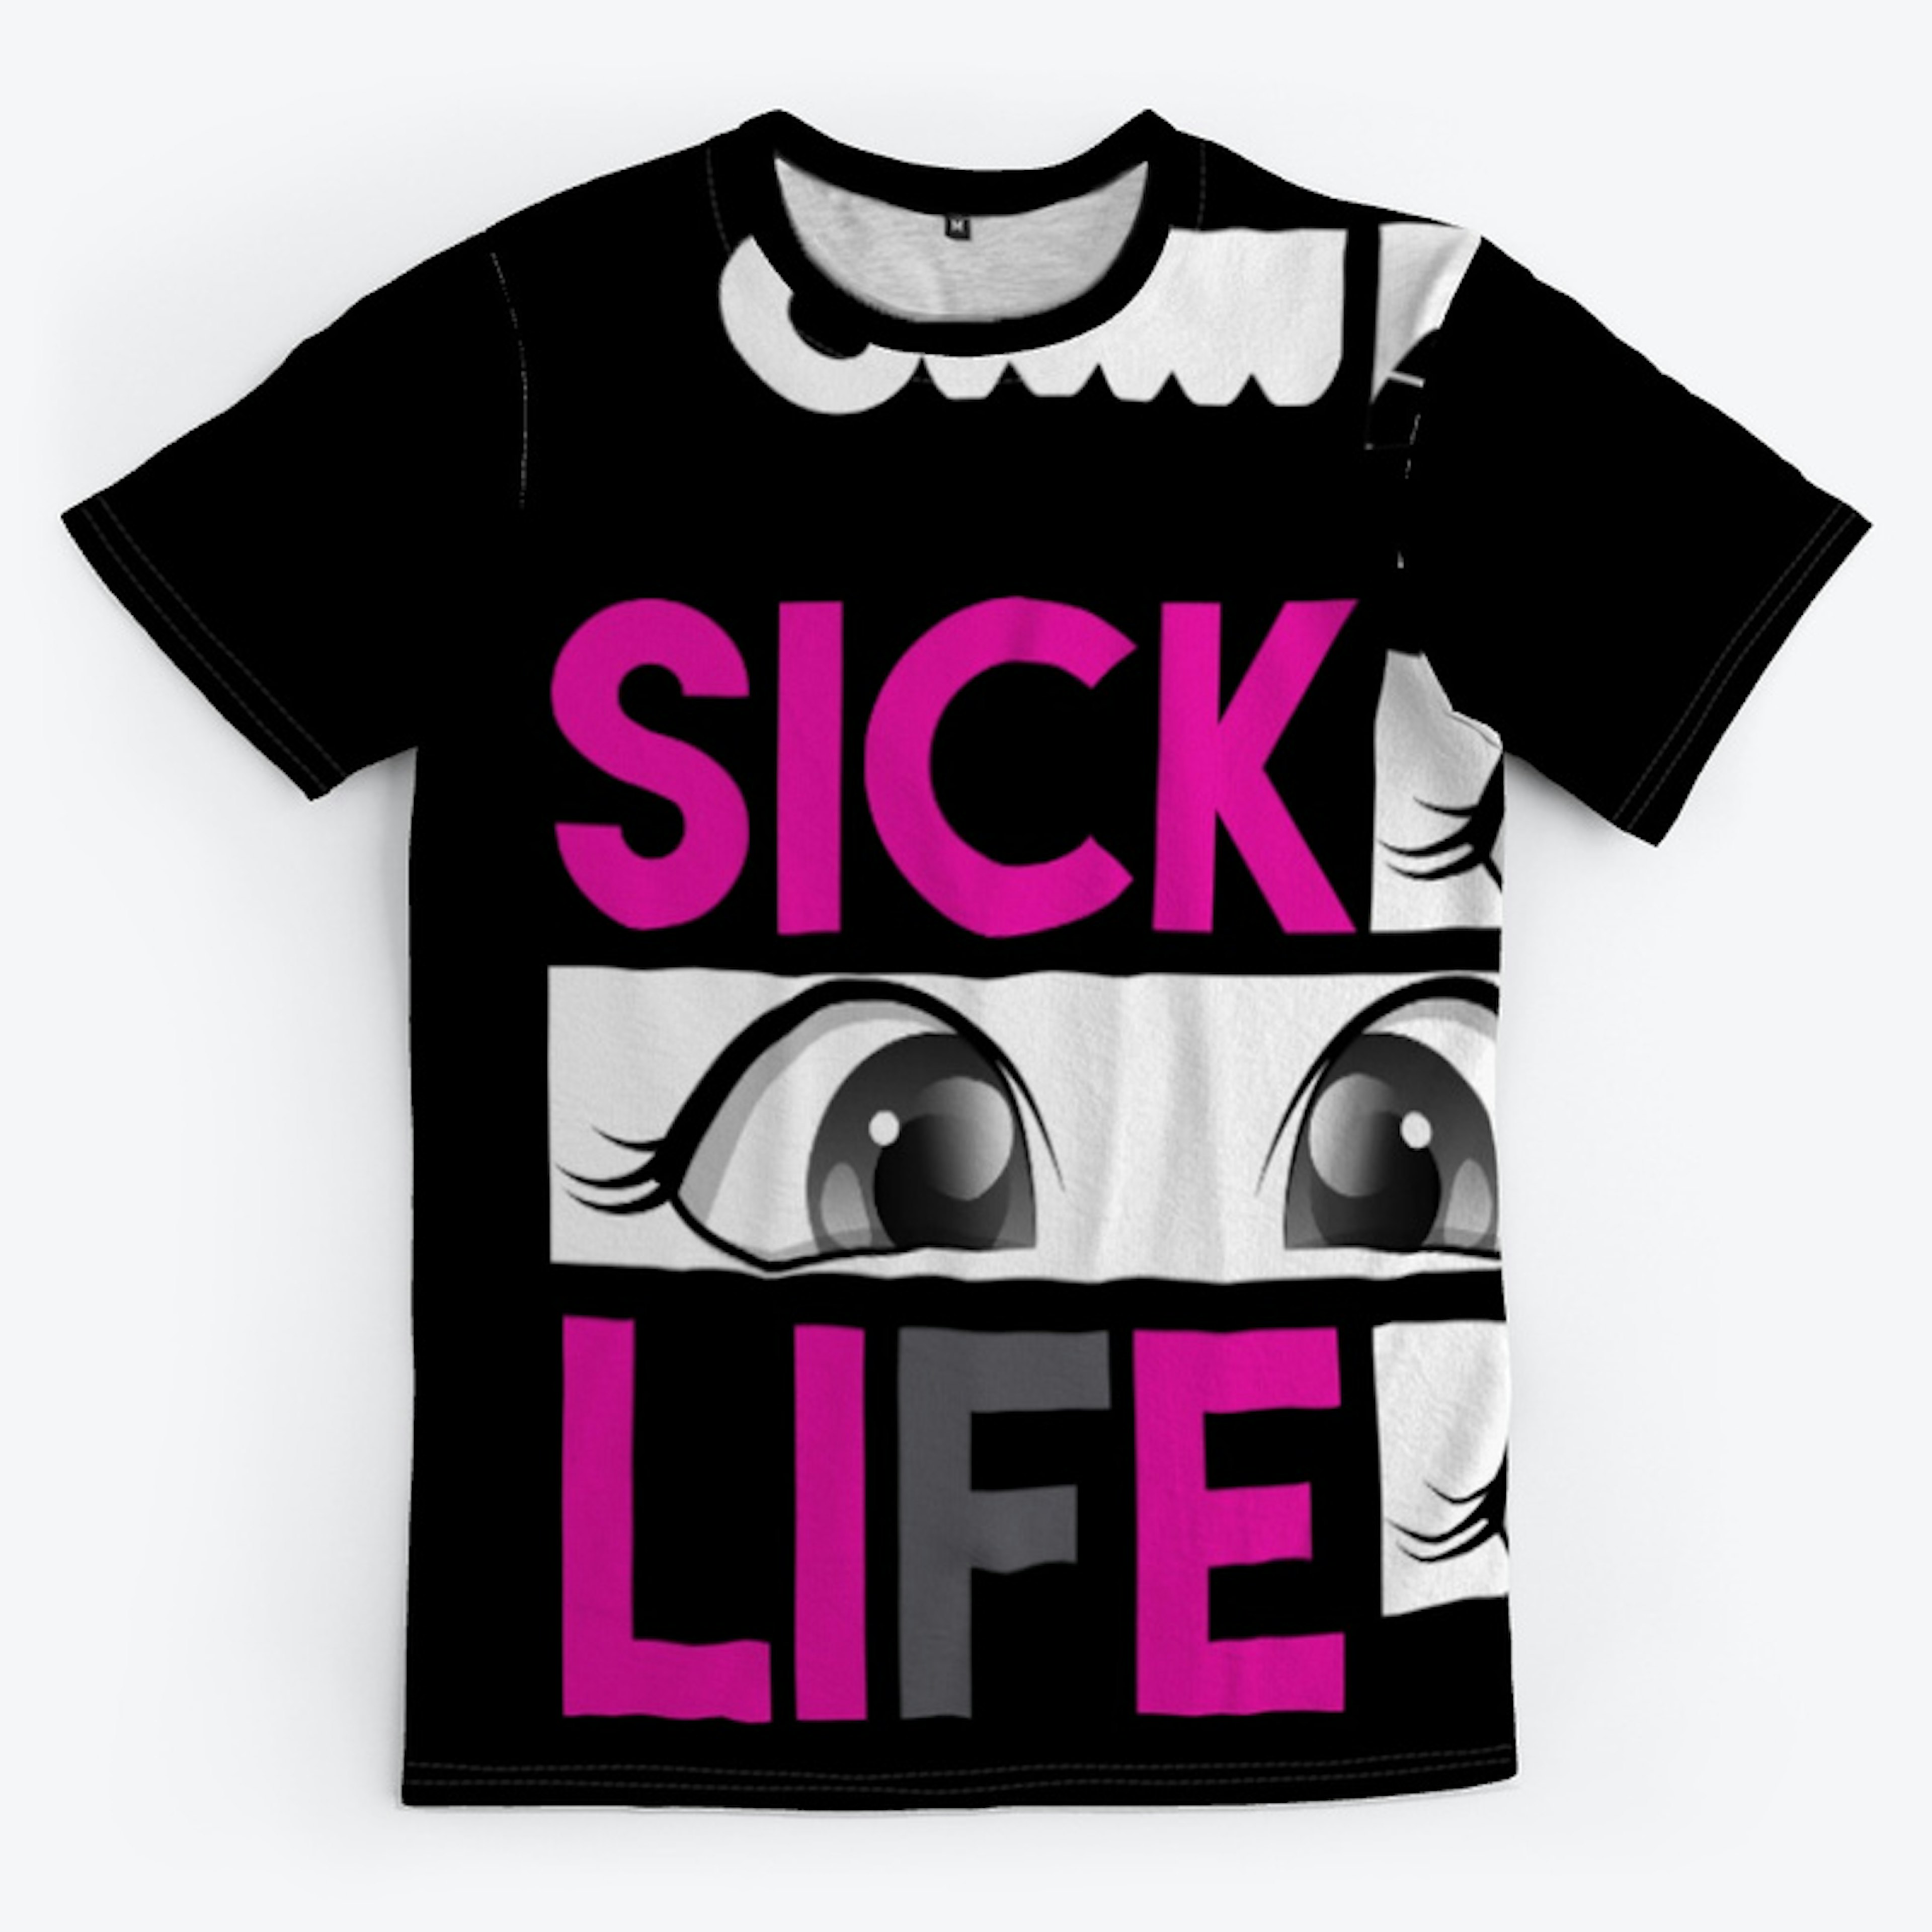 Sick of LIE